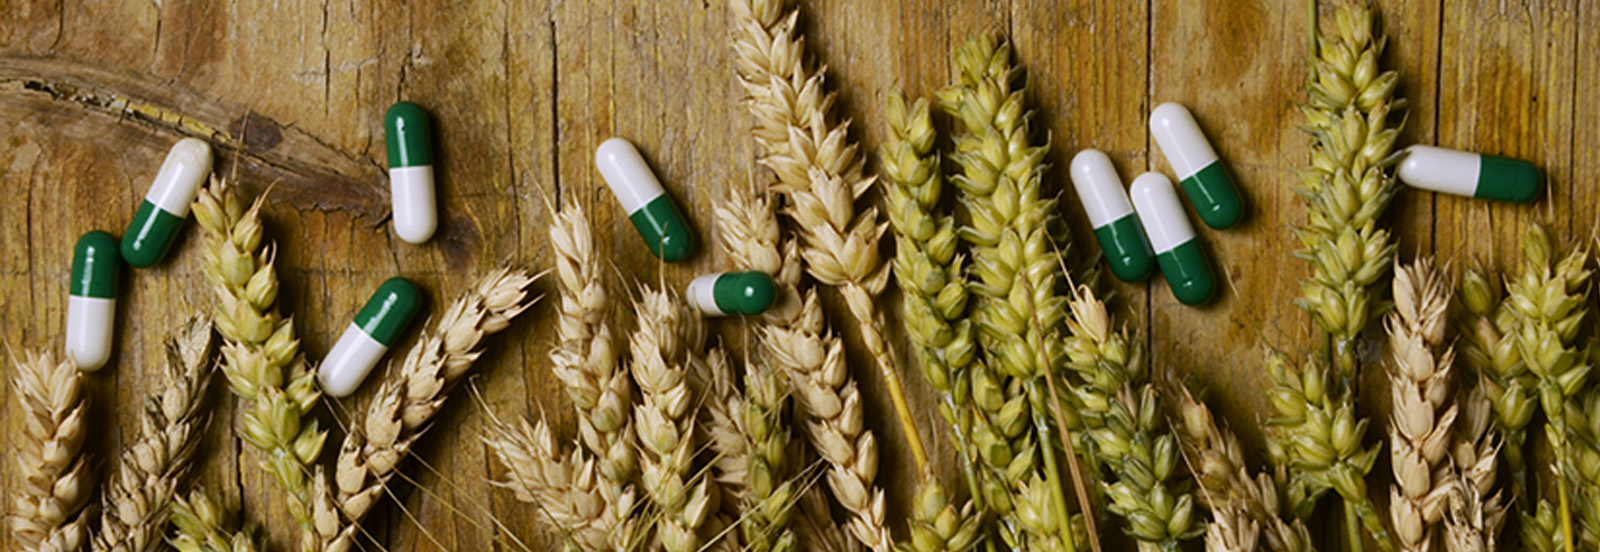 wheat grains and medicinal pills photo